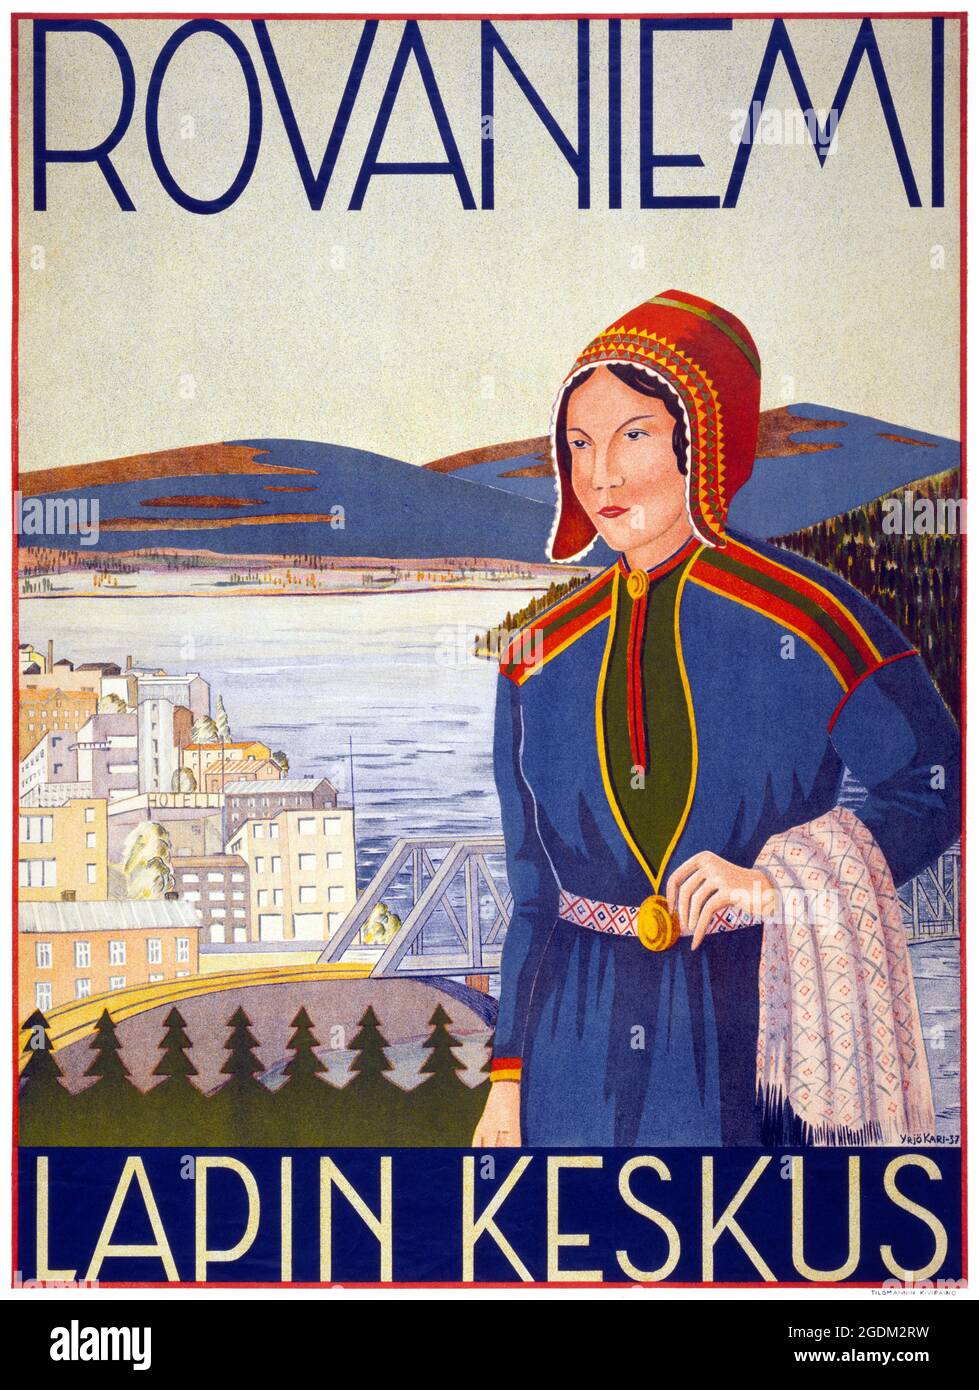 Rovaniemi. Lapin Keskus by Yrjö Kari (1901-1959). Restored vintage poster published in 1936 in Finland. Stock Photo